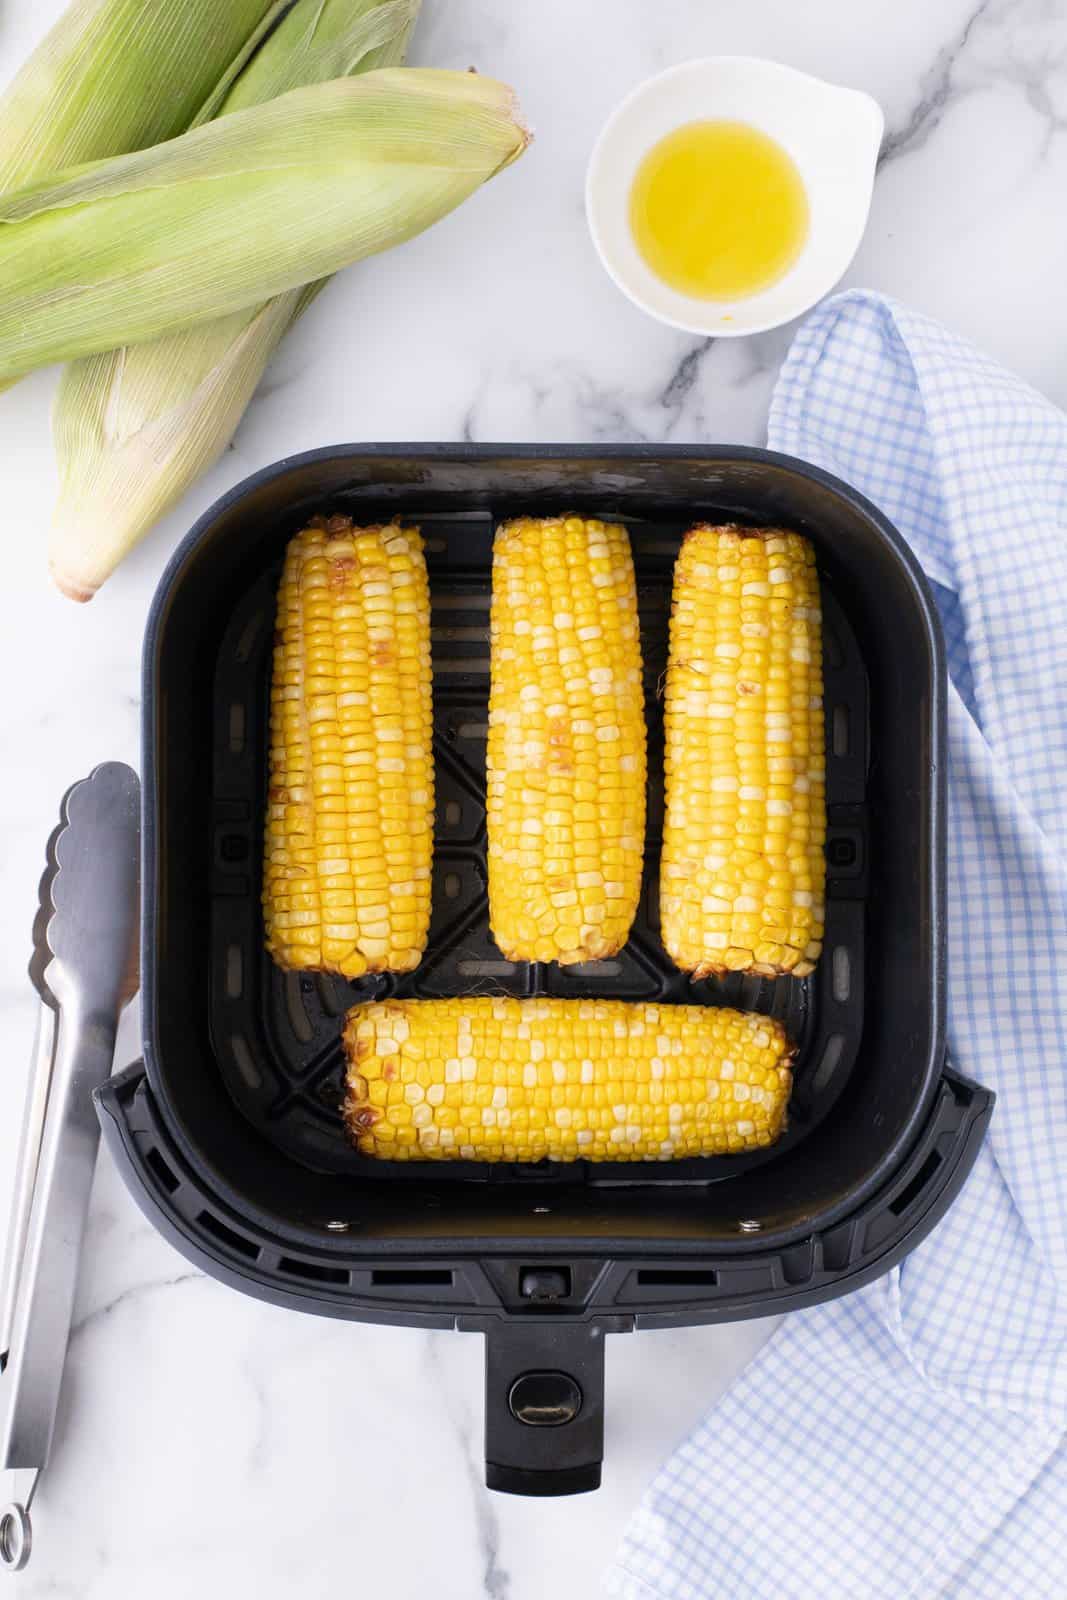 Four ears of corn in Air Fryer basket.